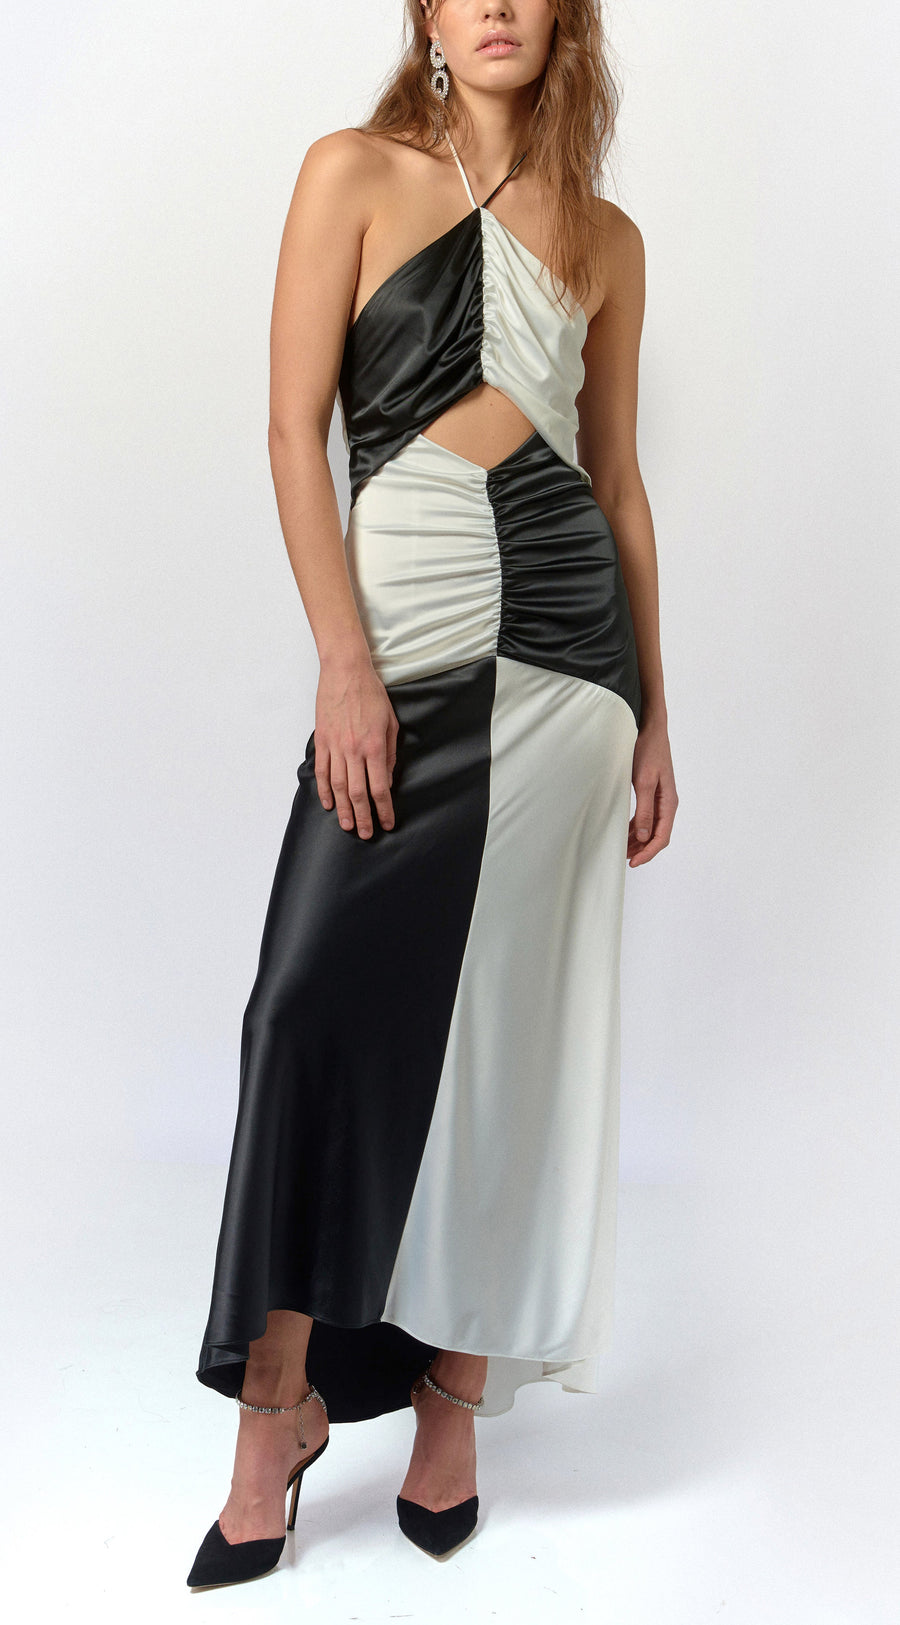 Freya Maxi Dress in Black & White Satin - De La Vali